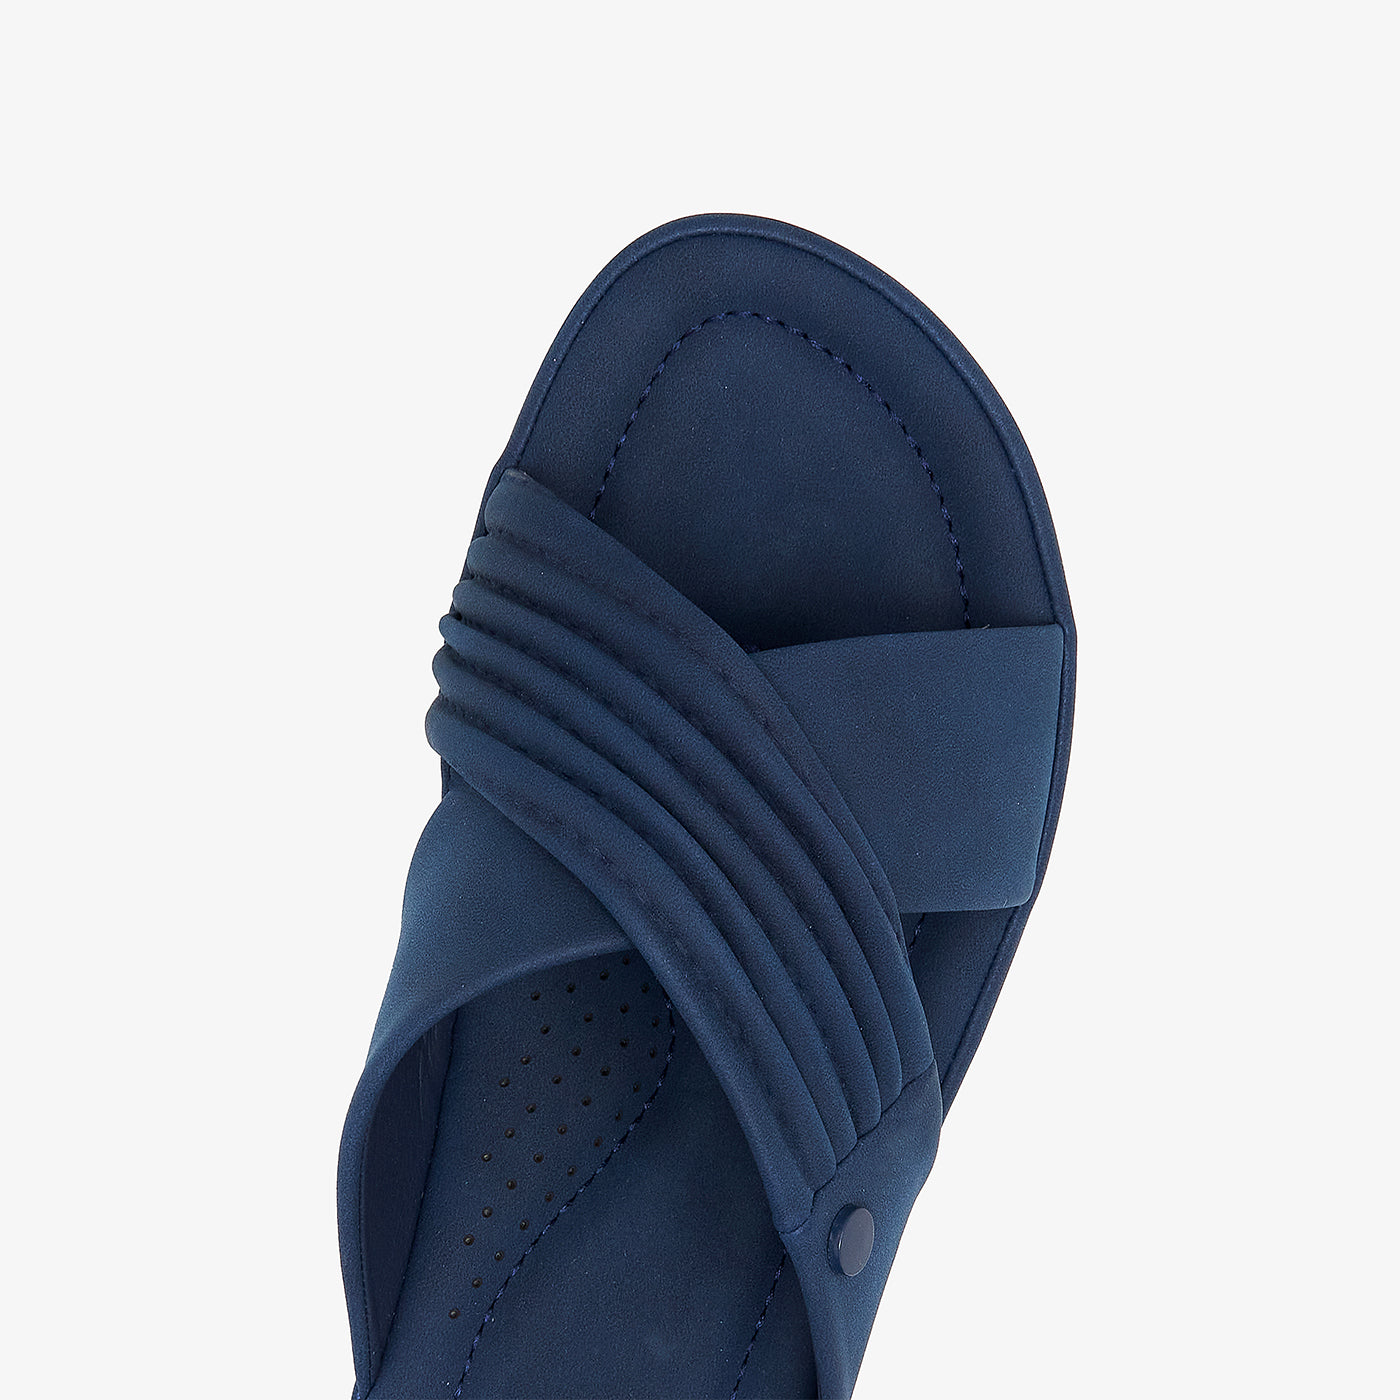 High Comfort Slippers for Women